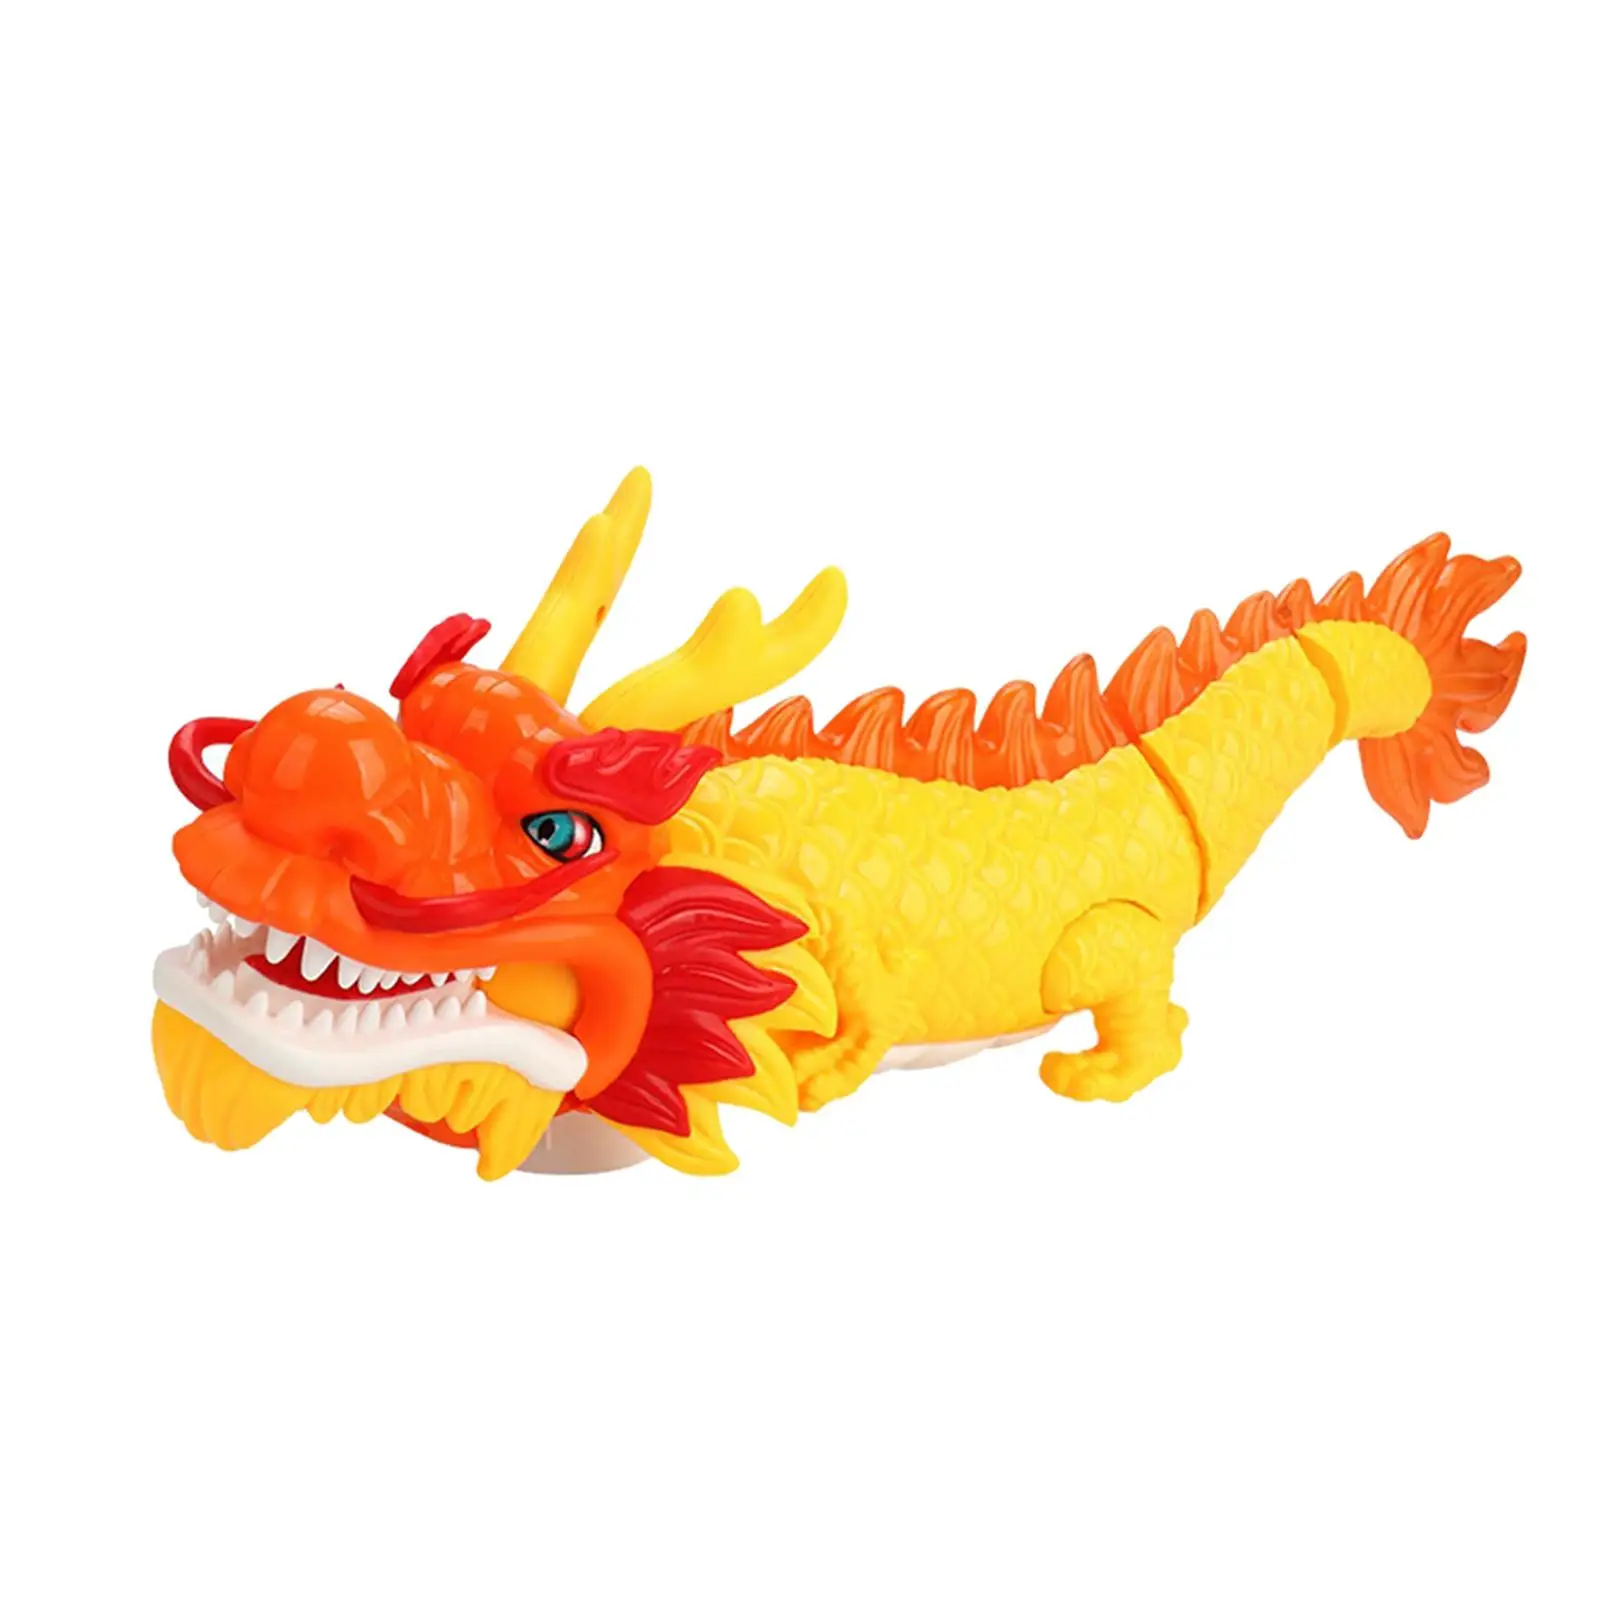 Eletric Dragon Toy Educational Learning Crawling Toy for Boy Adults Girls